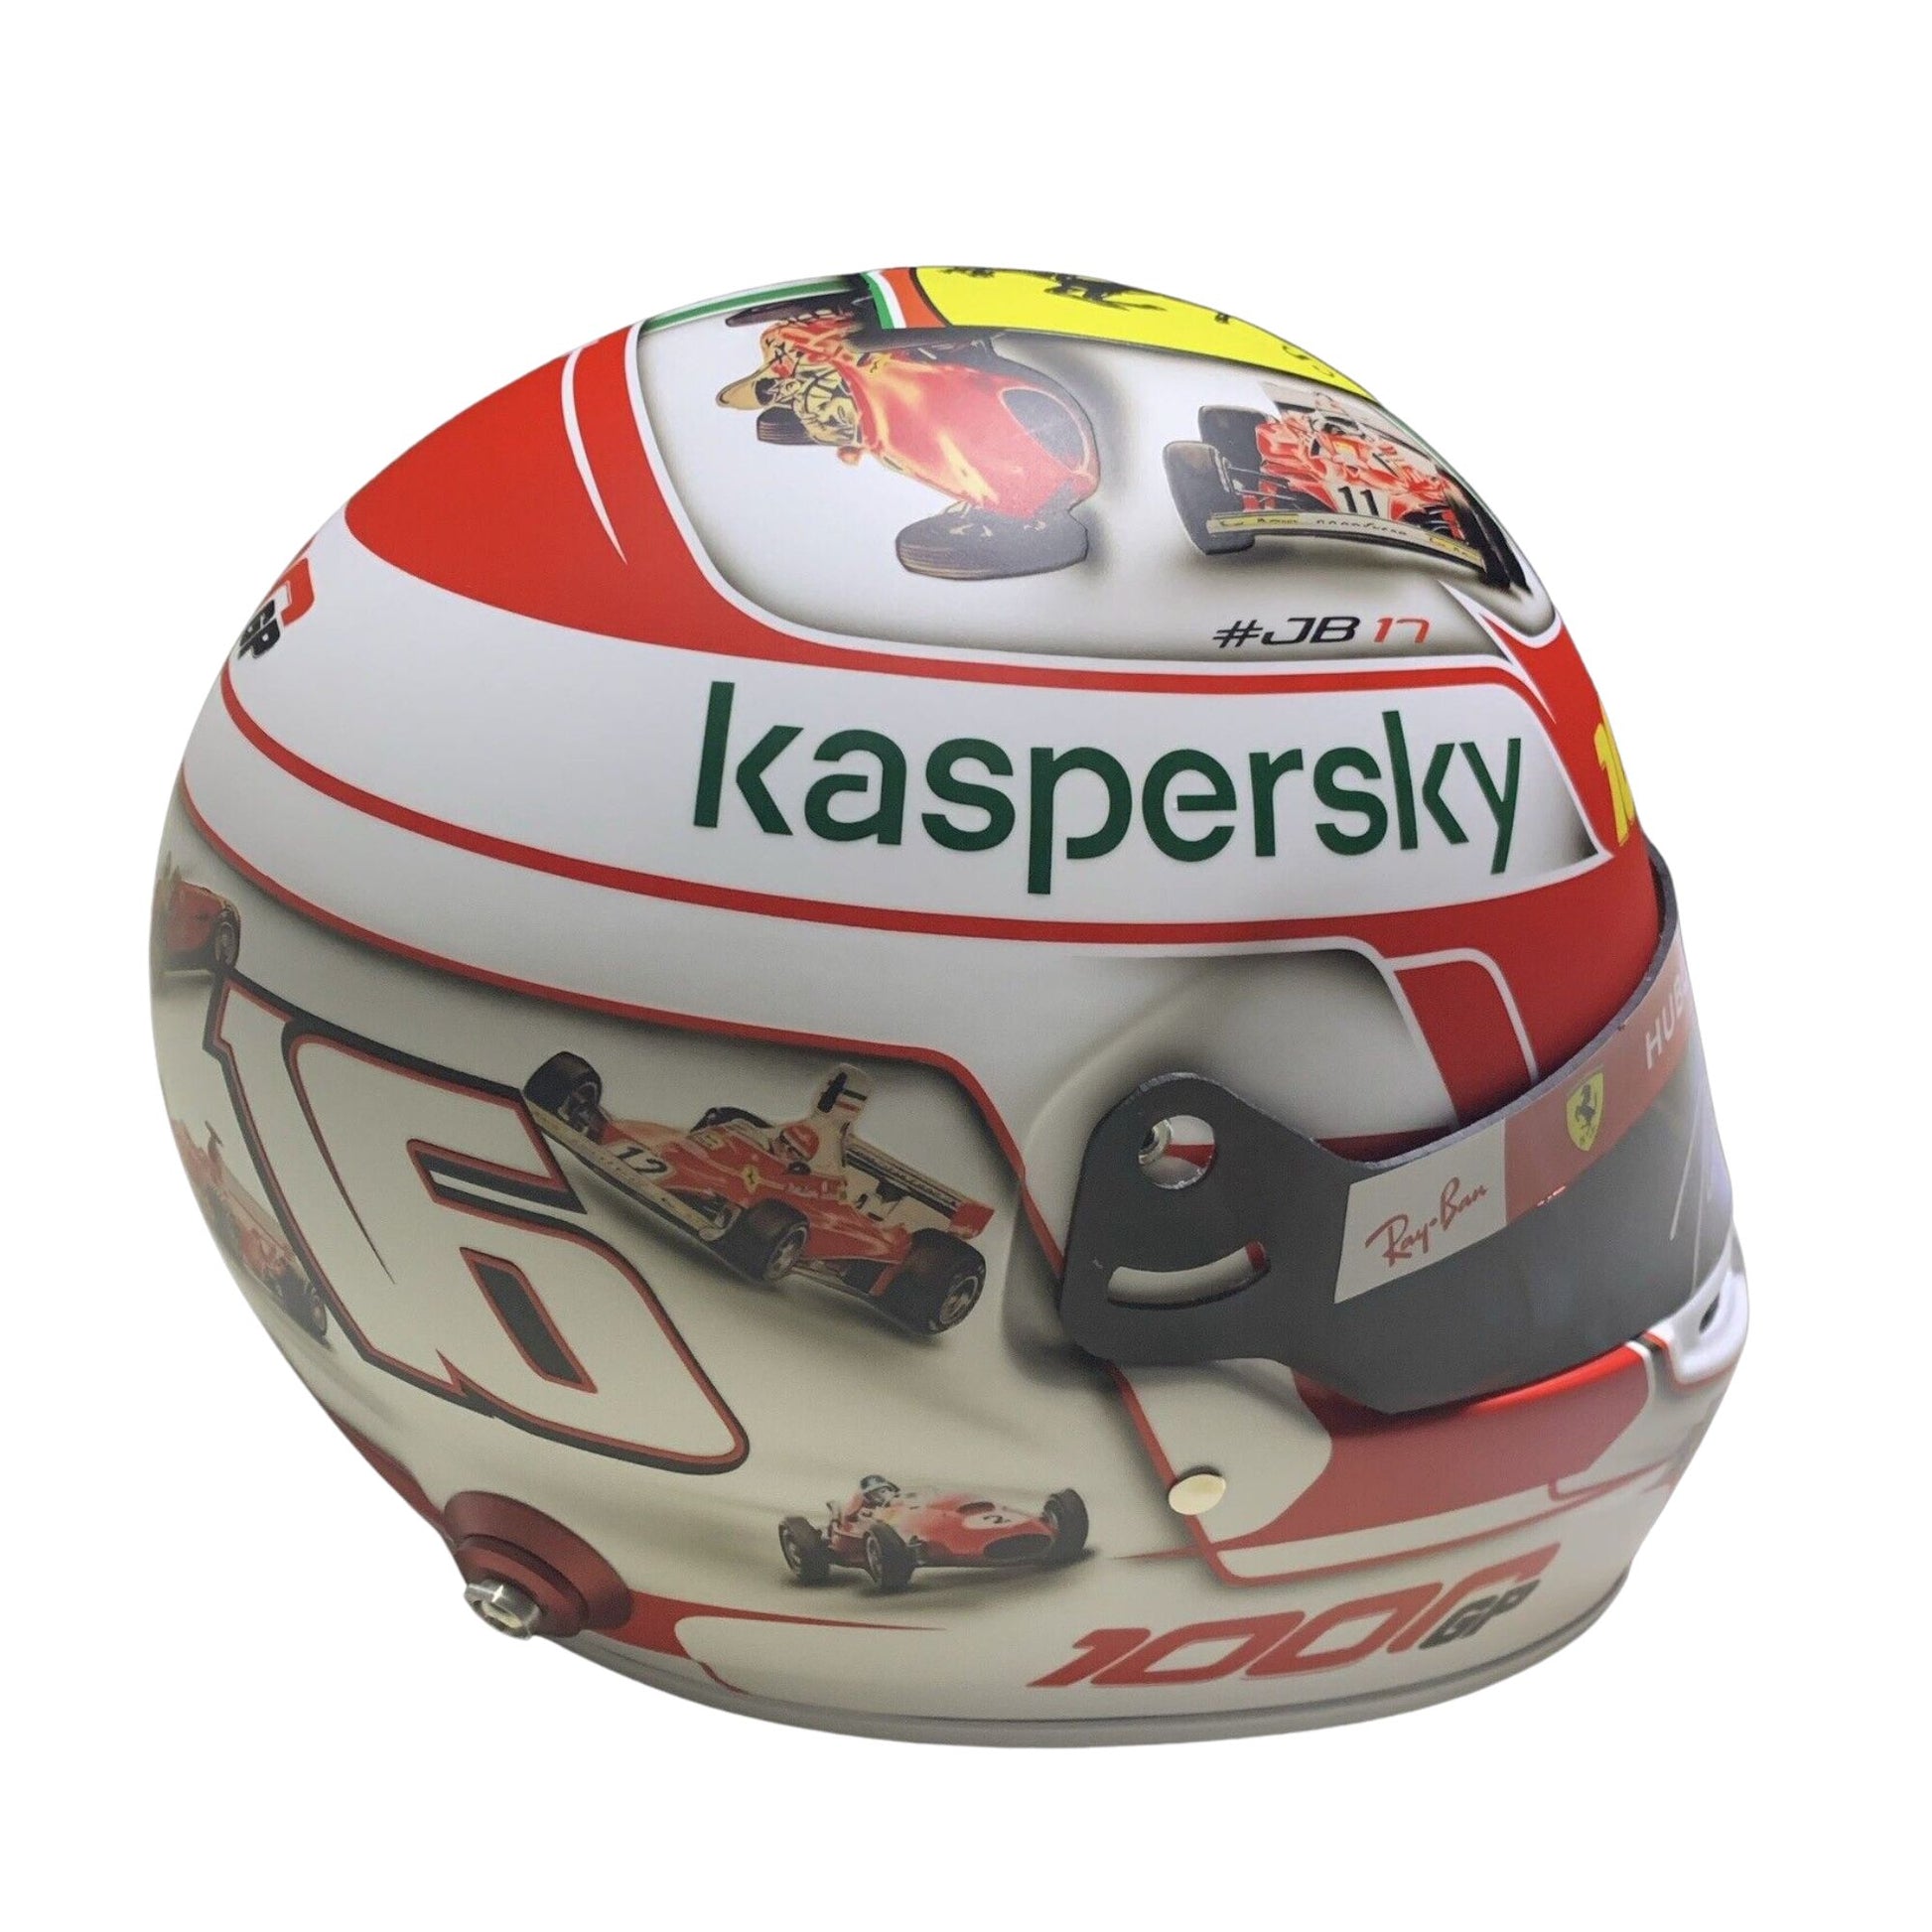 Charles Leclerc Signed Helmet - F1 Memorabilia - side view